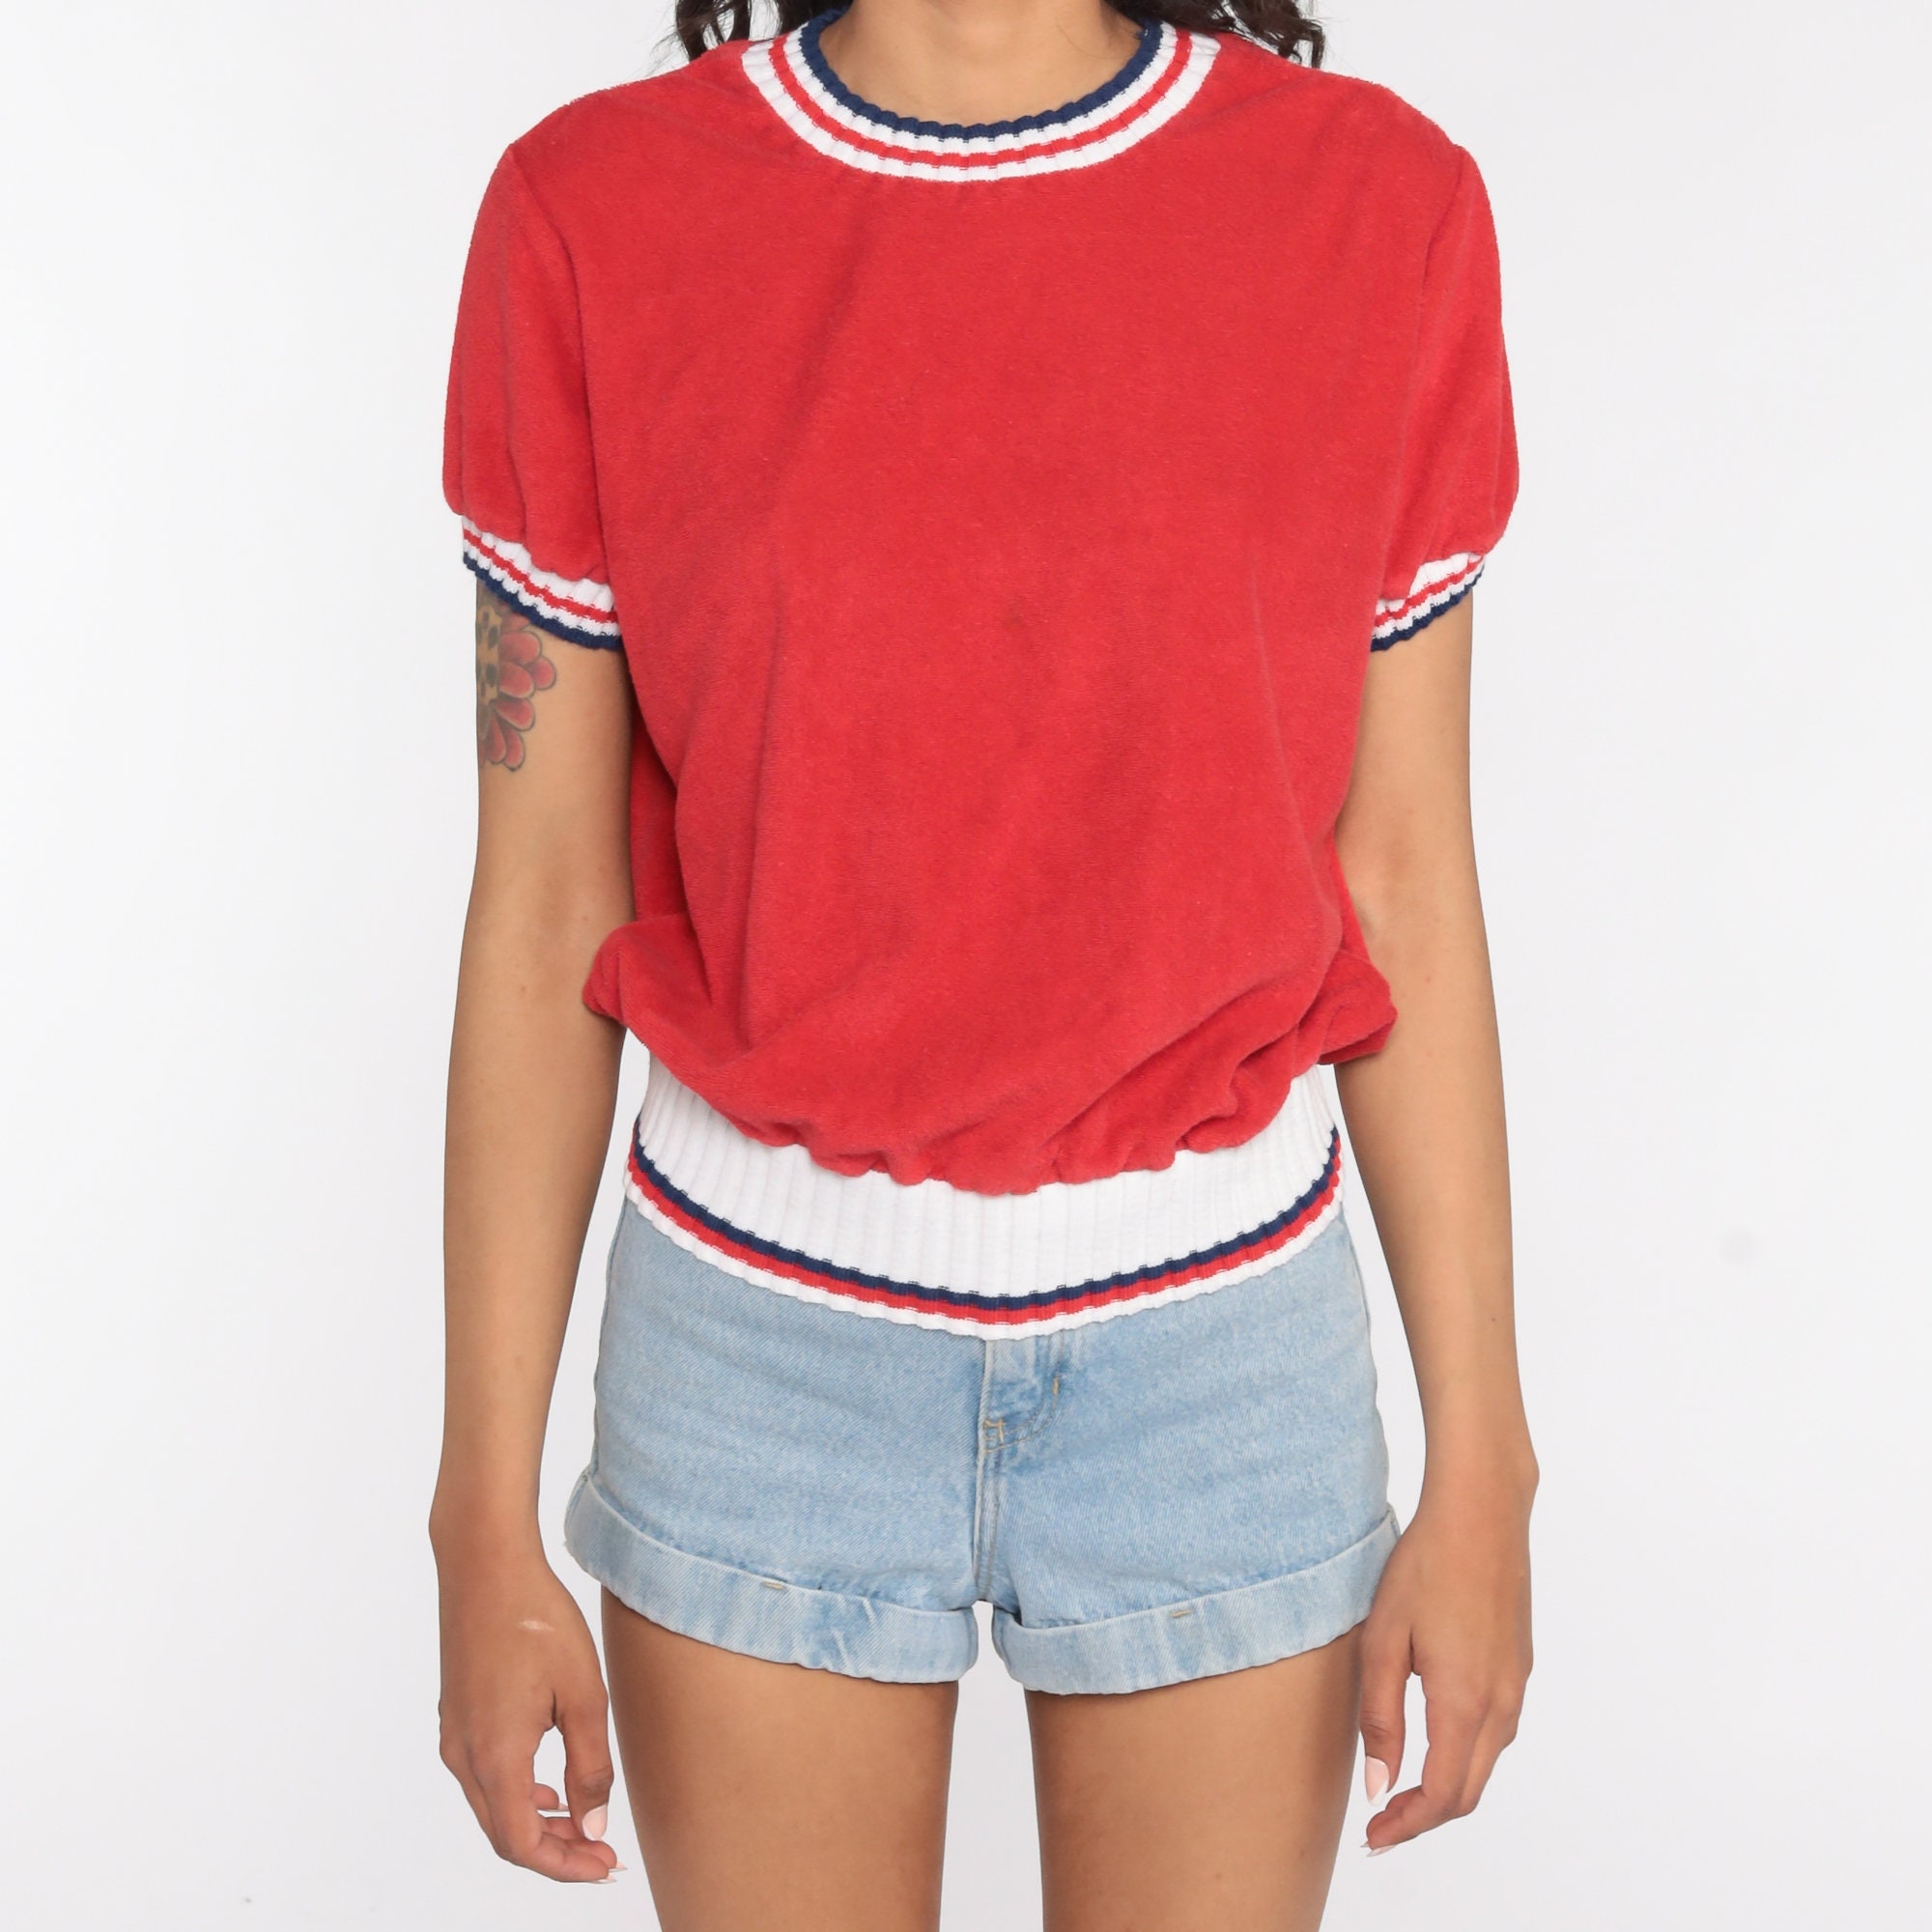 Terry Cloth Shirt 80s Red Terrycloth Plain Tshirt Ringer Tee Retro T ...